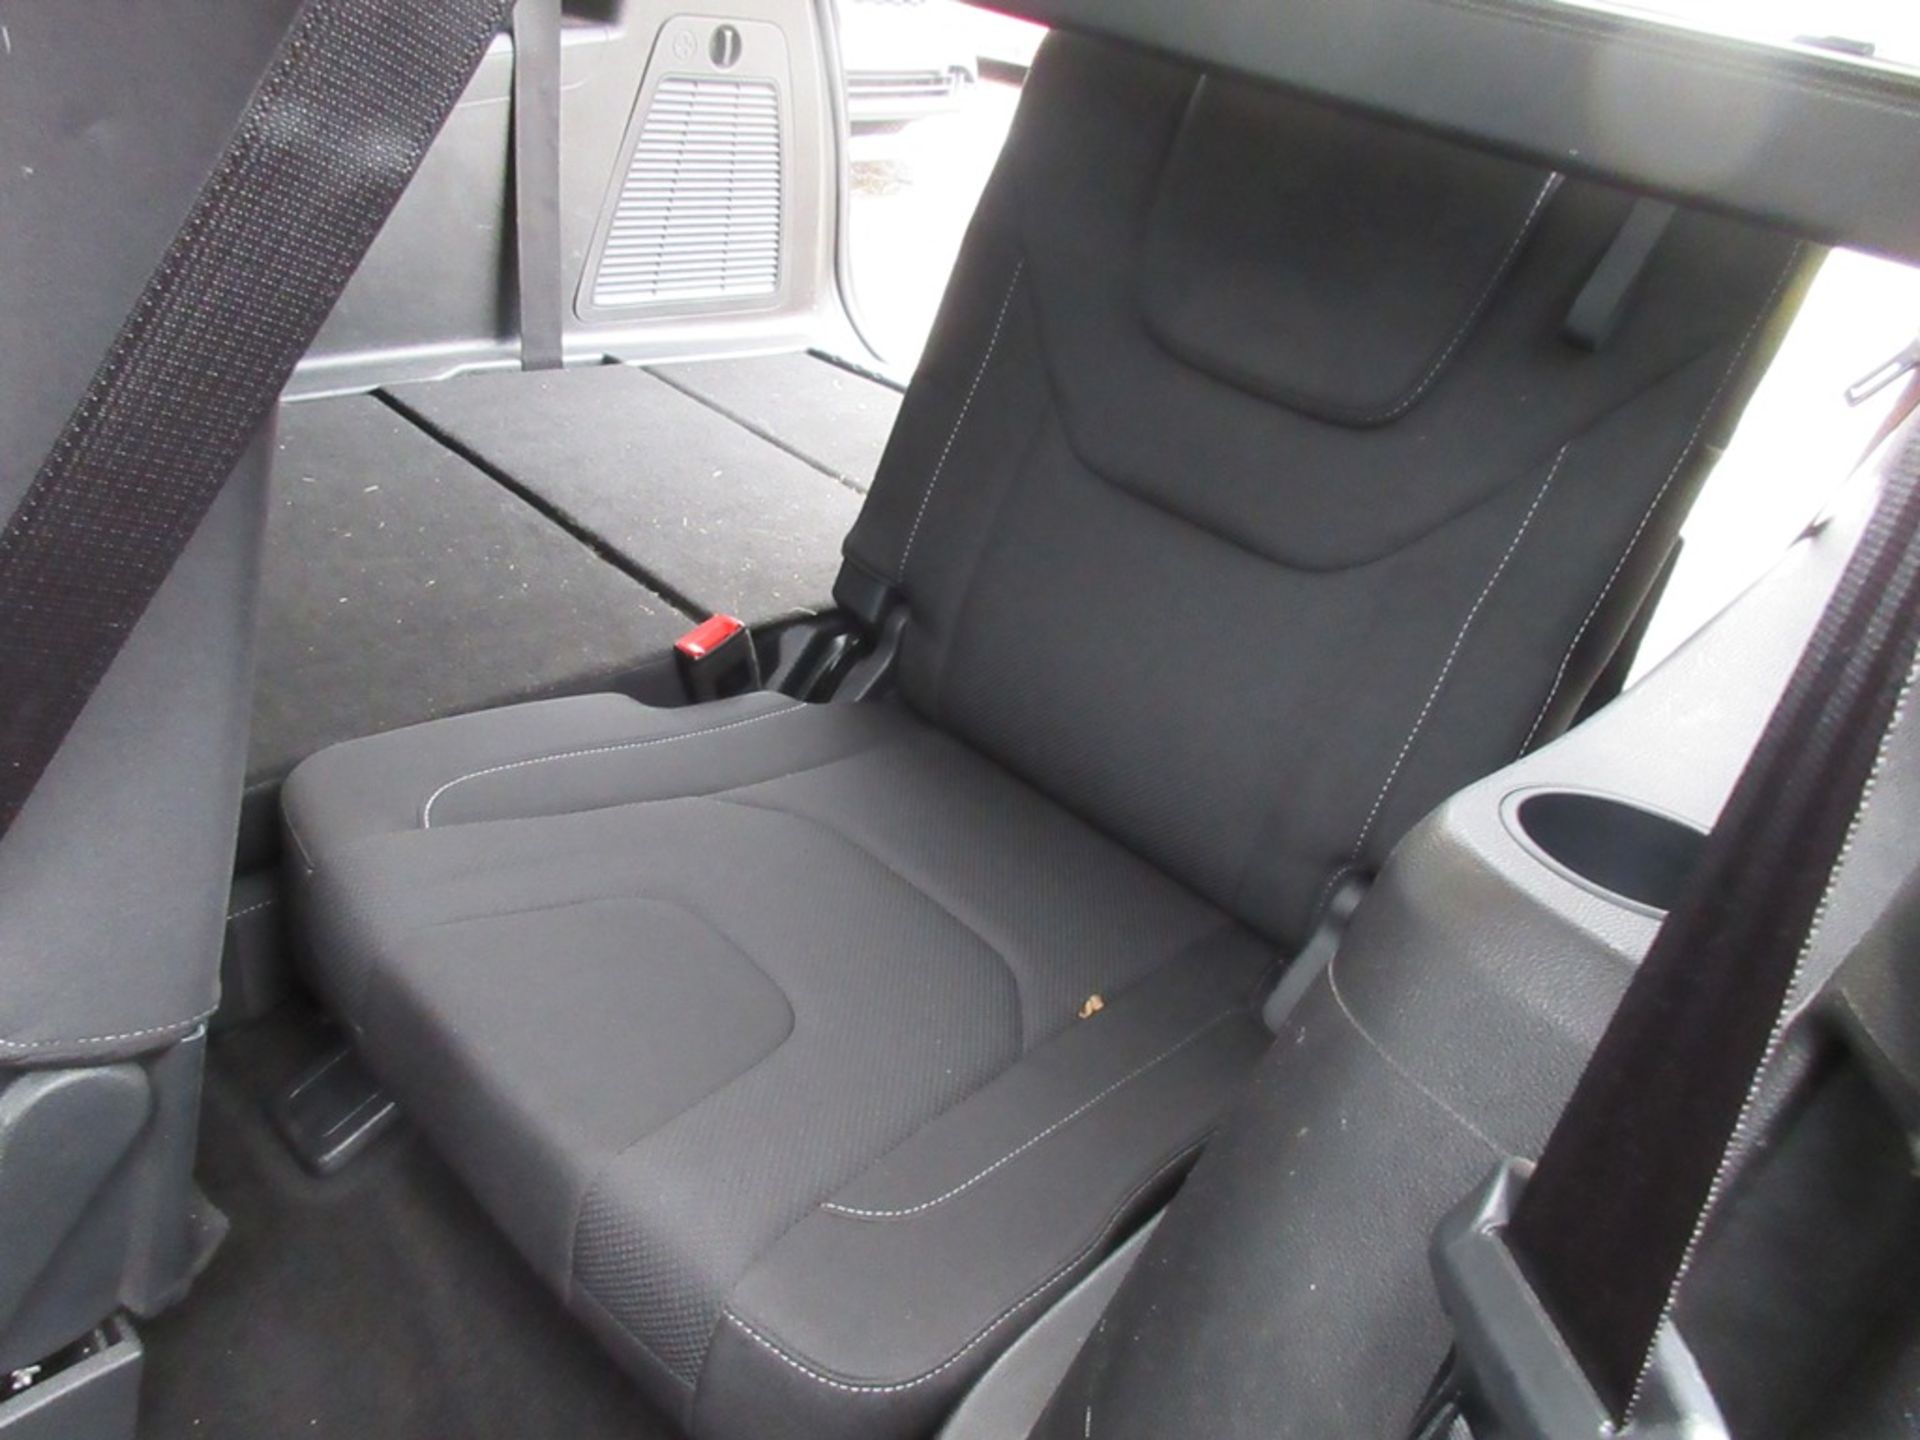 Ford S-Max Titanium Turbo 2.0Tdci 7 seater MPV, 177bhp - Image 17 of 18